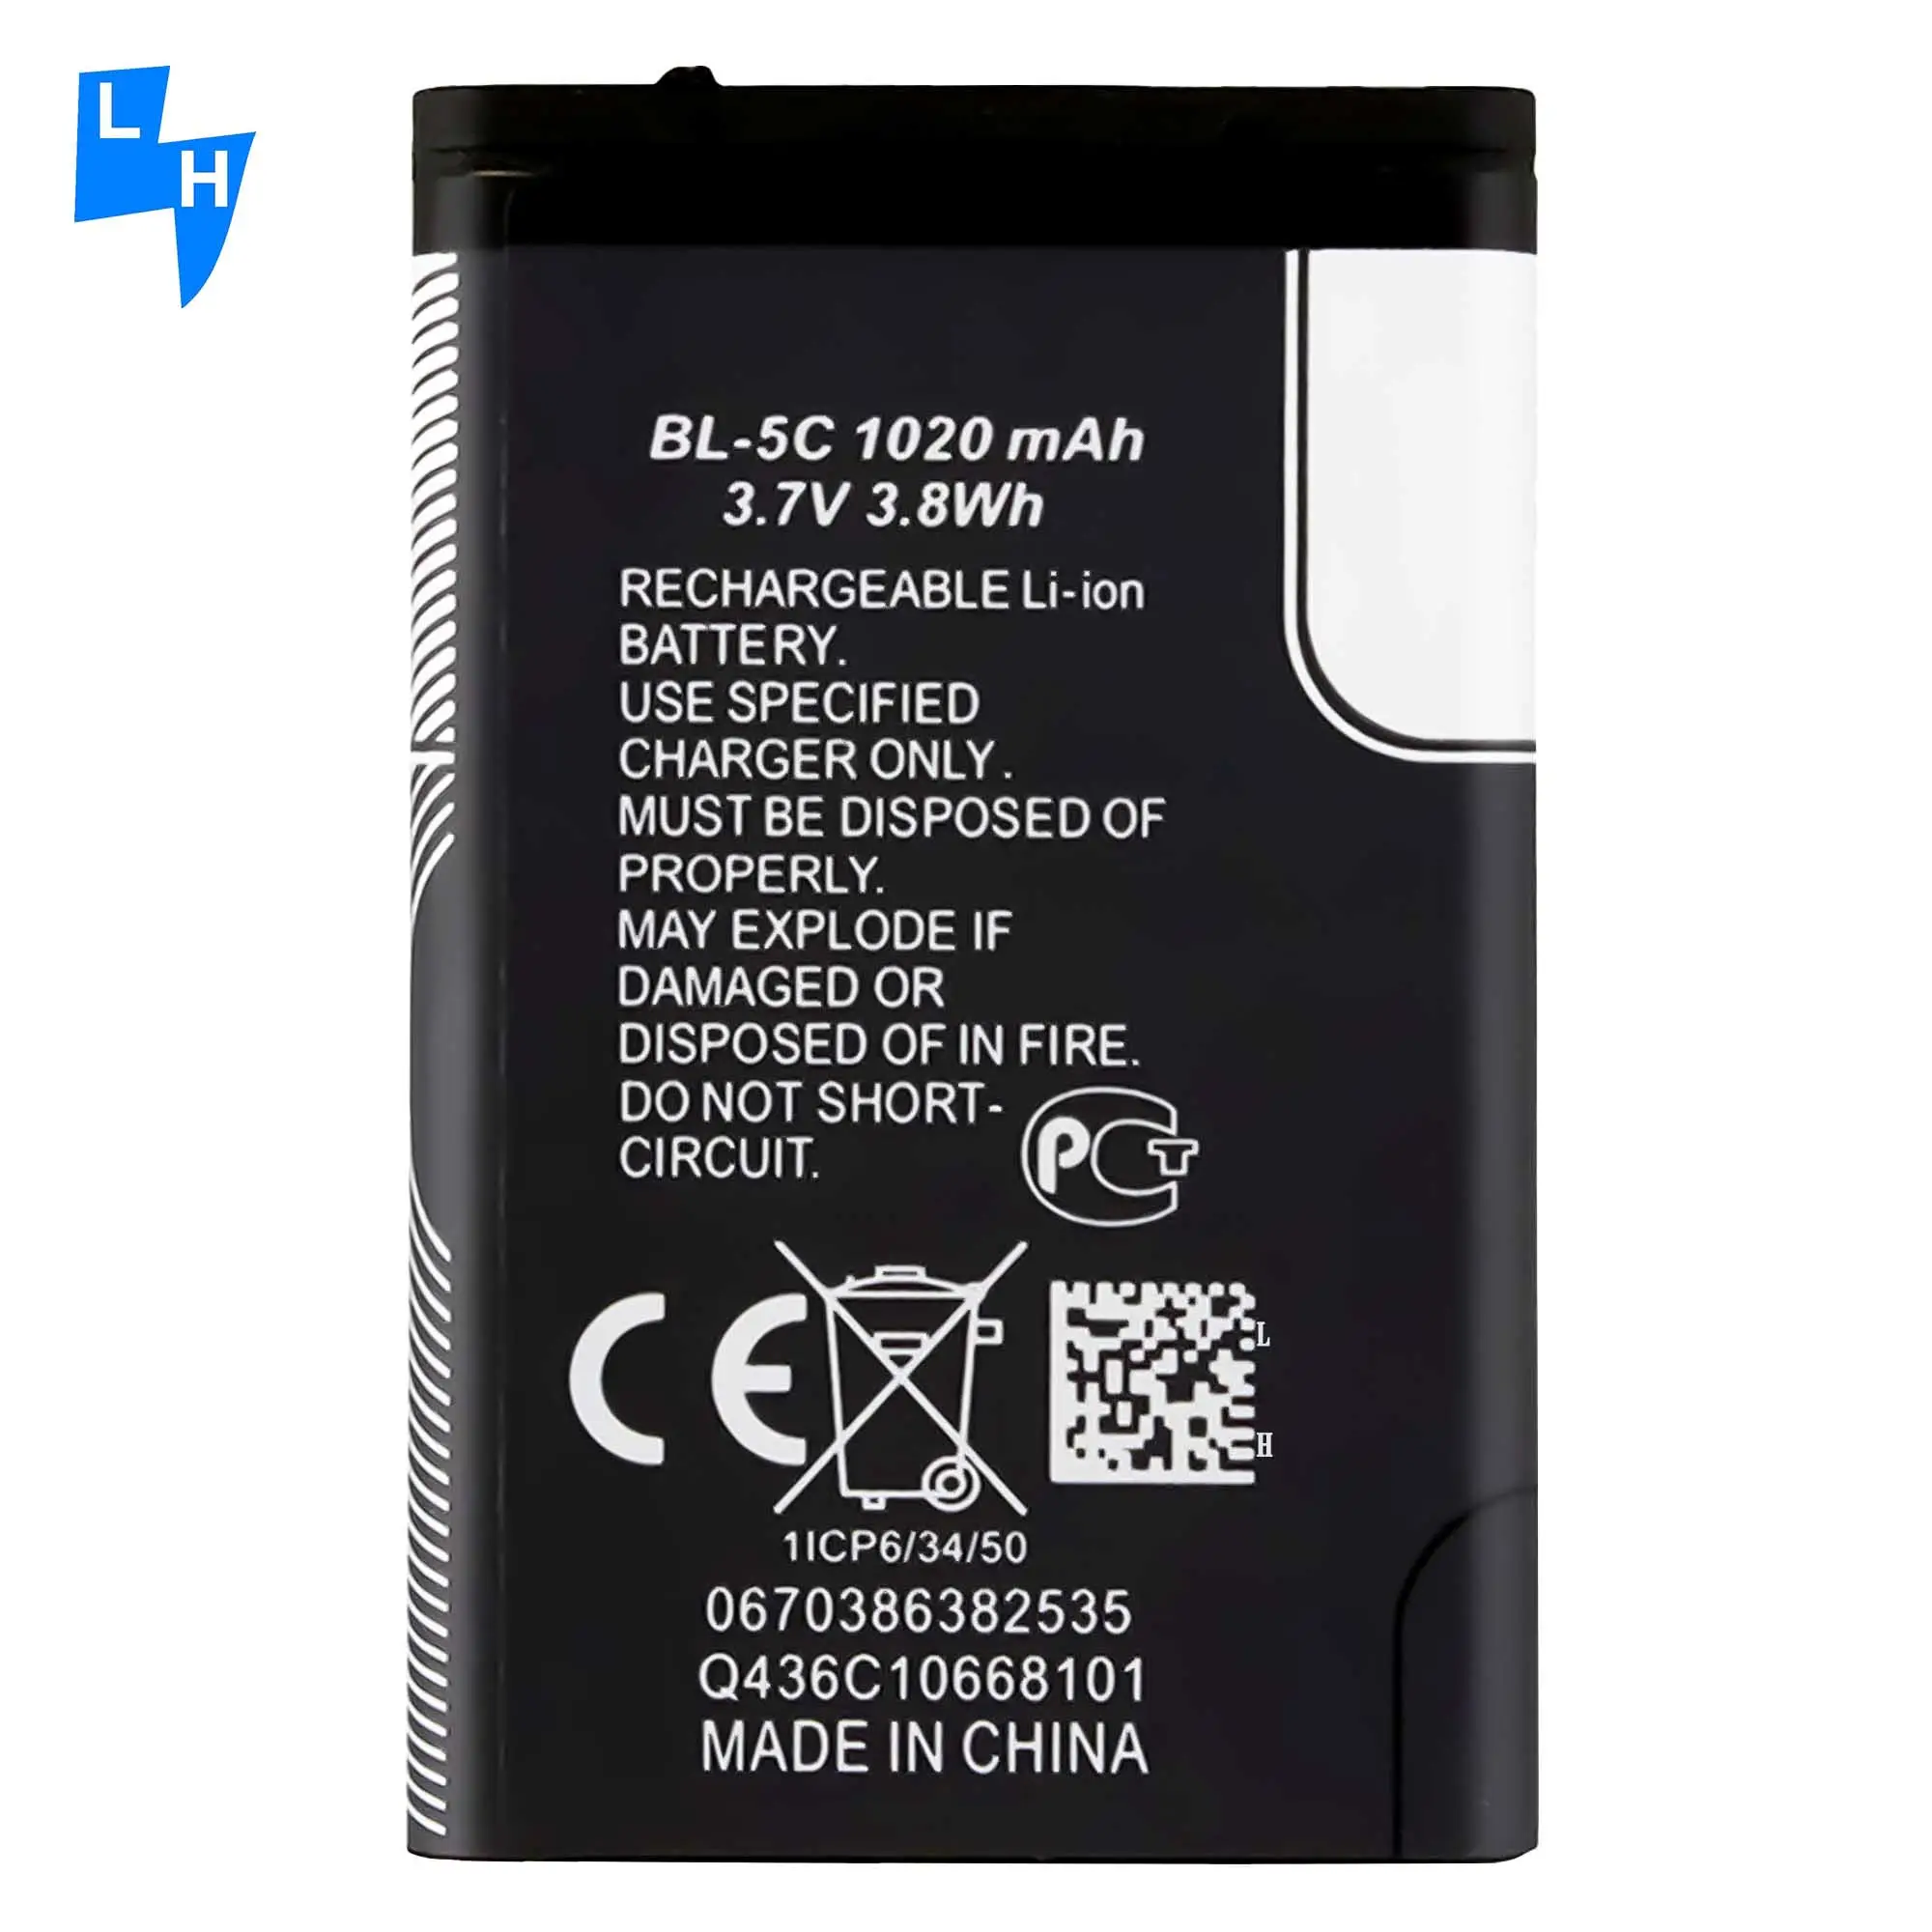 1020mAh BL-5C C2-01 2700C N71 6030 3110C 1100 1200 1650 battery for Nokia 5C battery